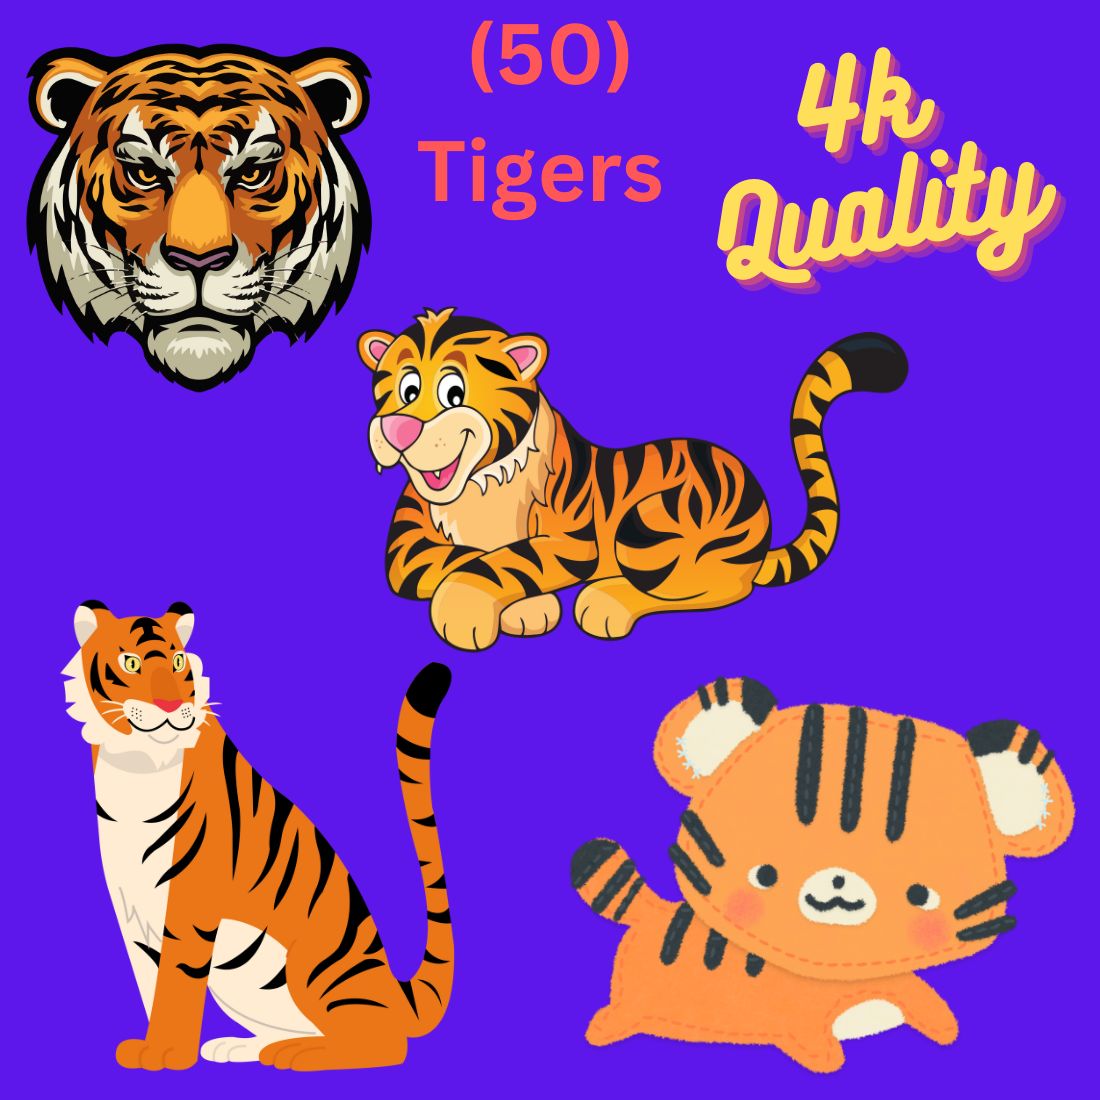 Tiger Graphics Design cover image.